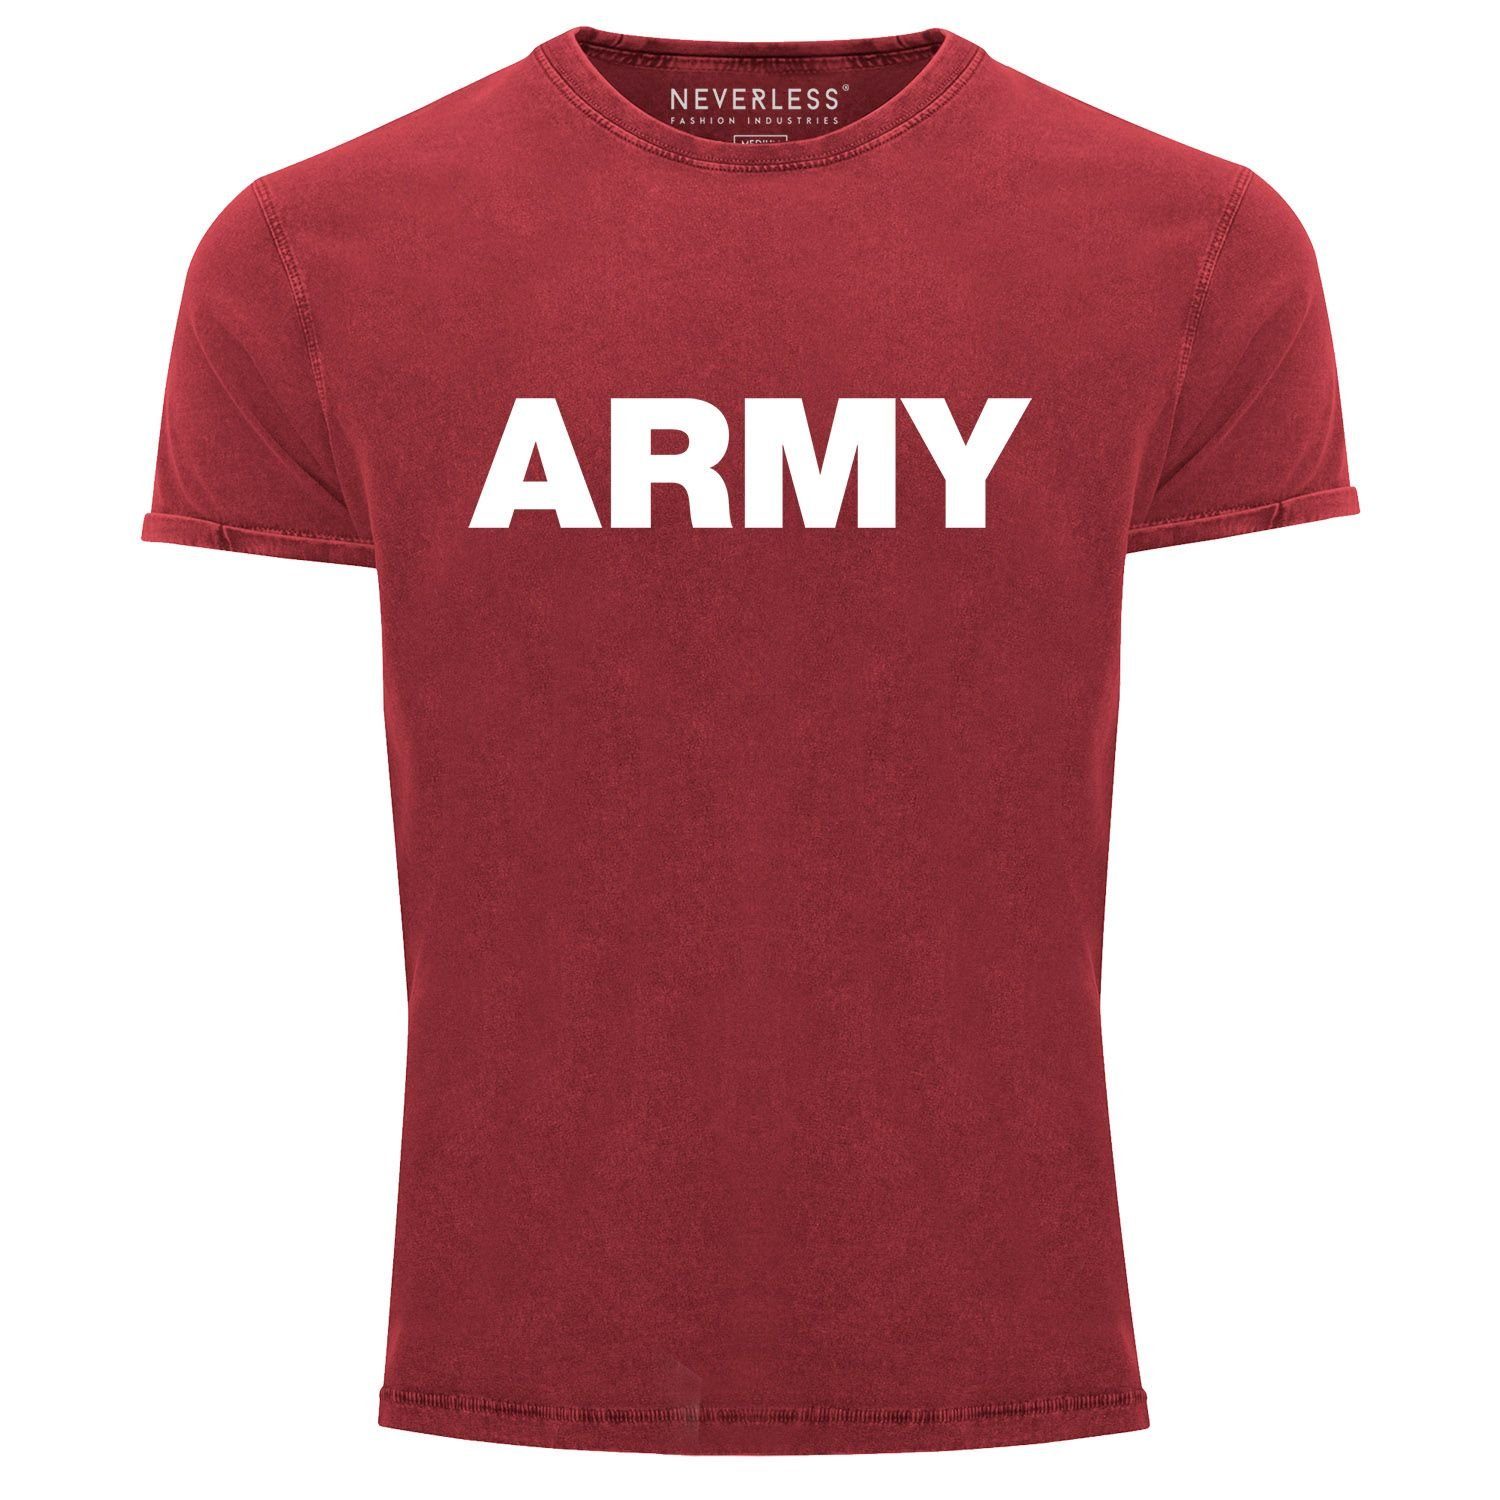 Neverless Print-Shirt Herren Vintage Shirt Army Printshirt T-Shirt Used Look Slim Fit Neverless® mit Print rot